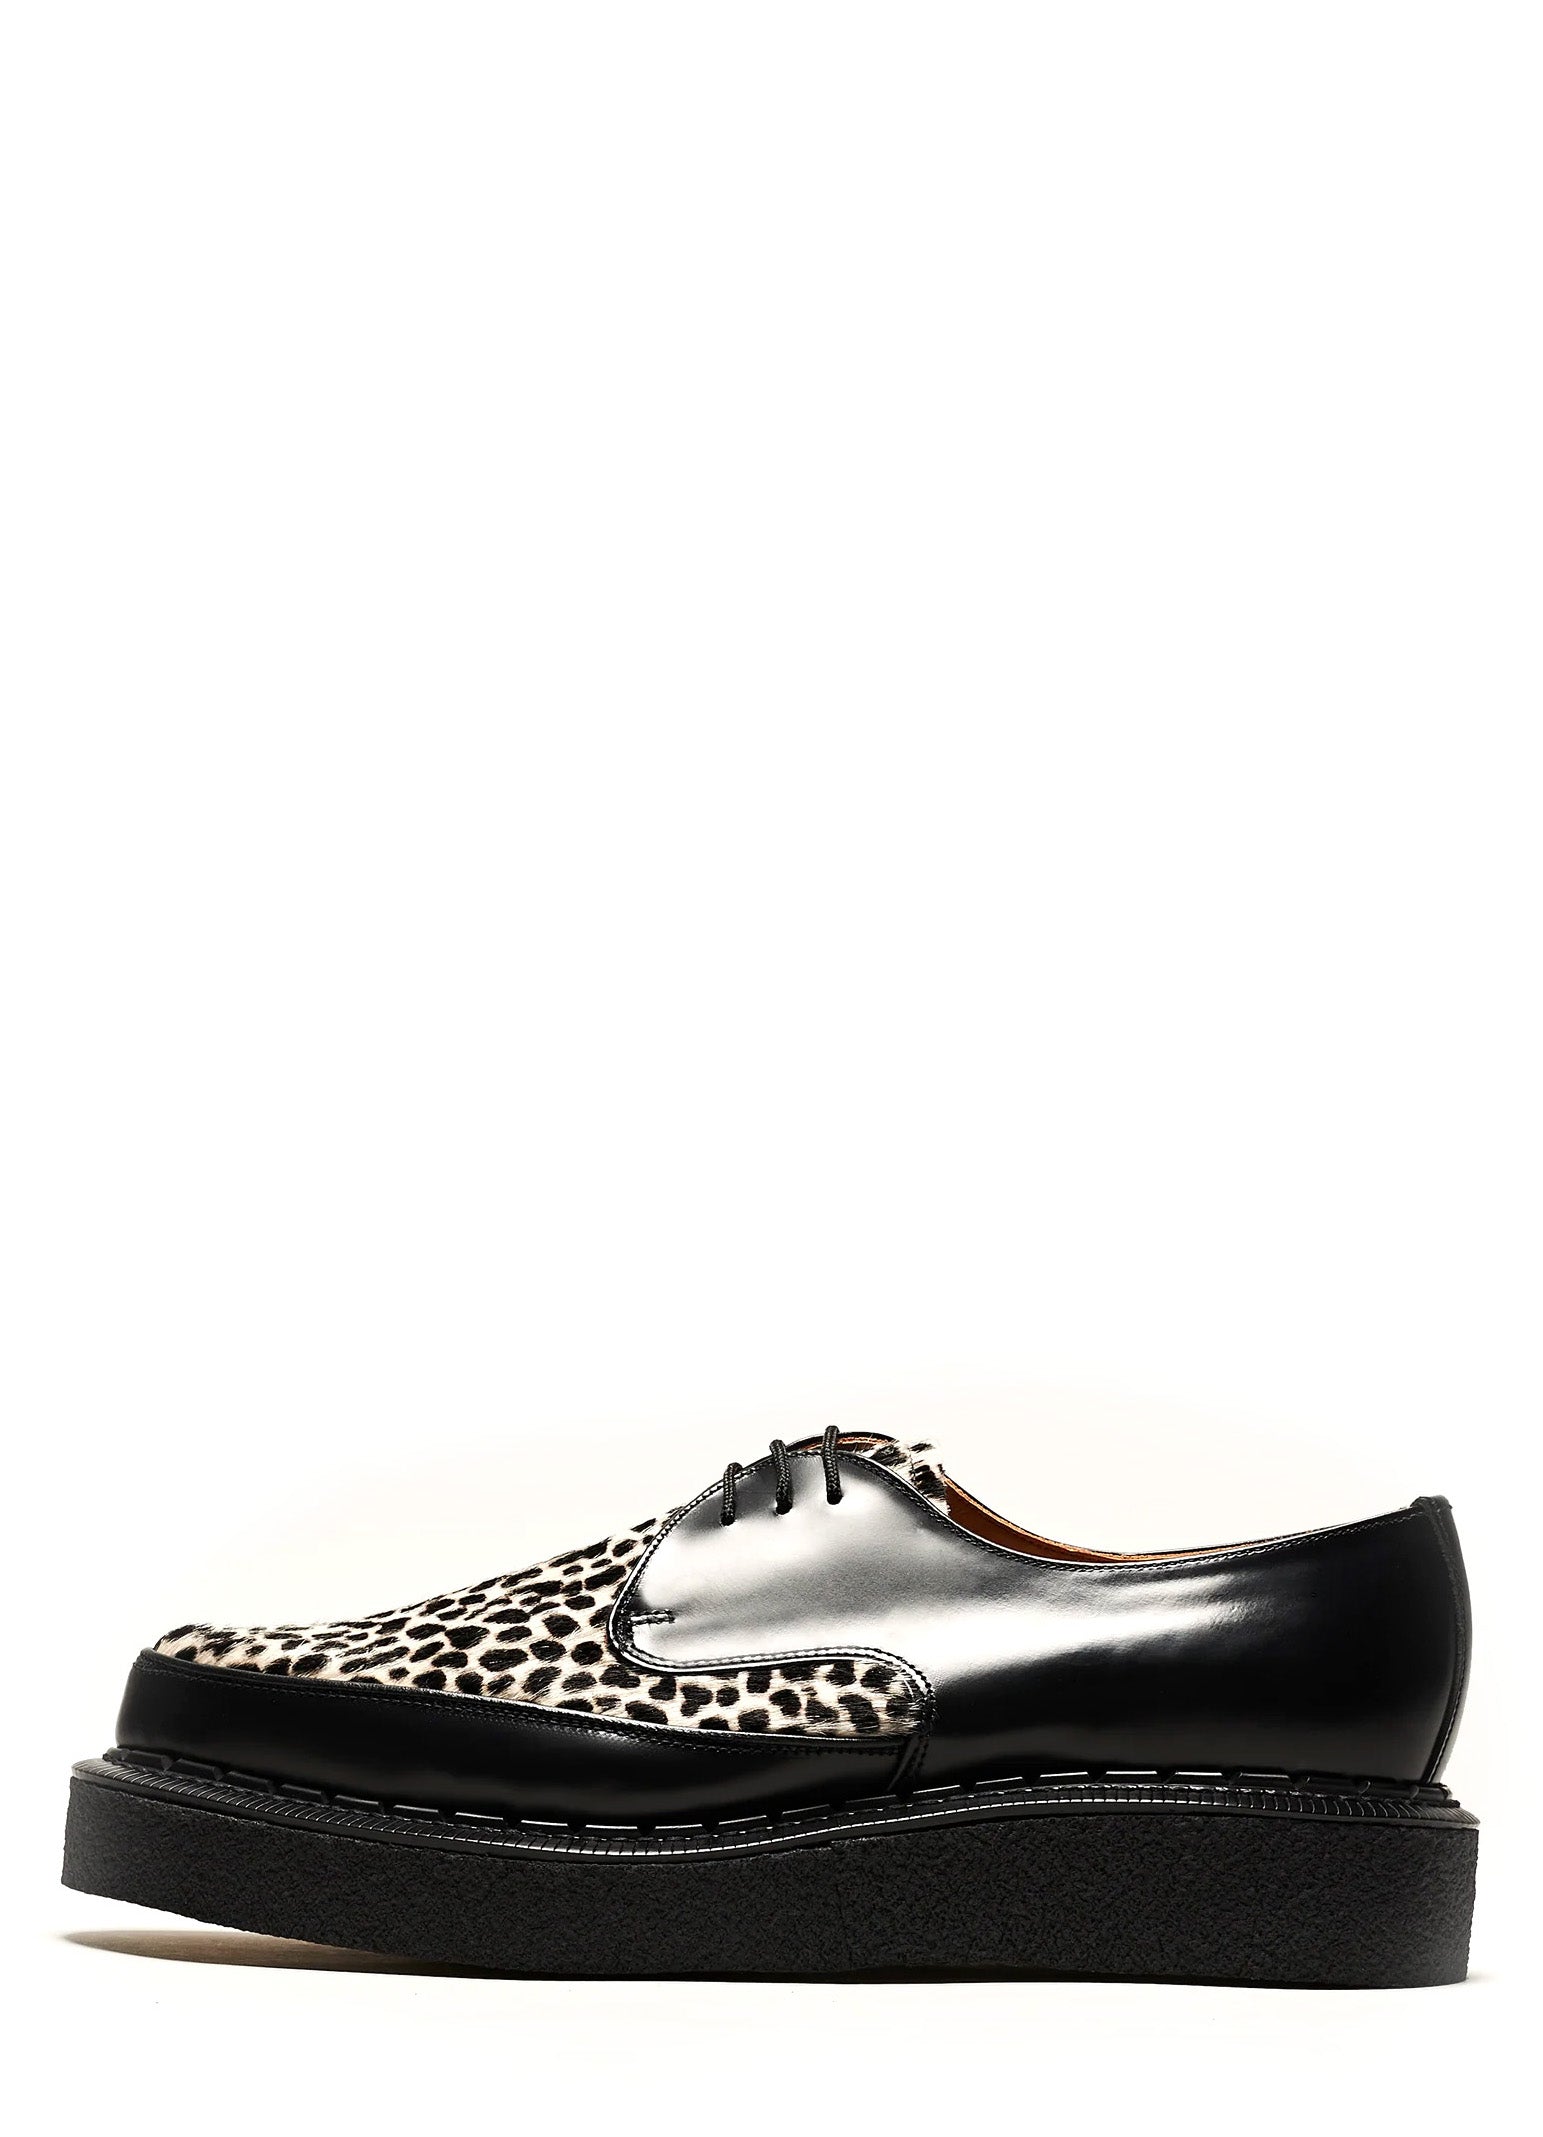 DIANO | Leather Shoe | Black/Leopard